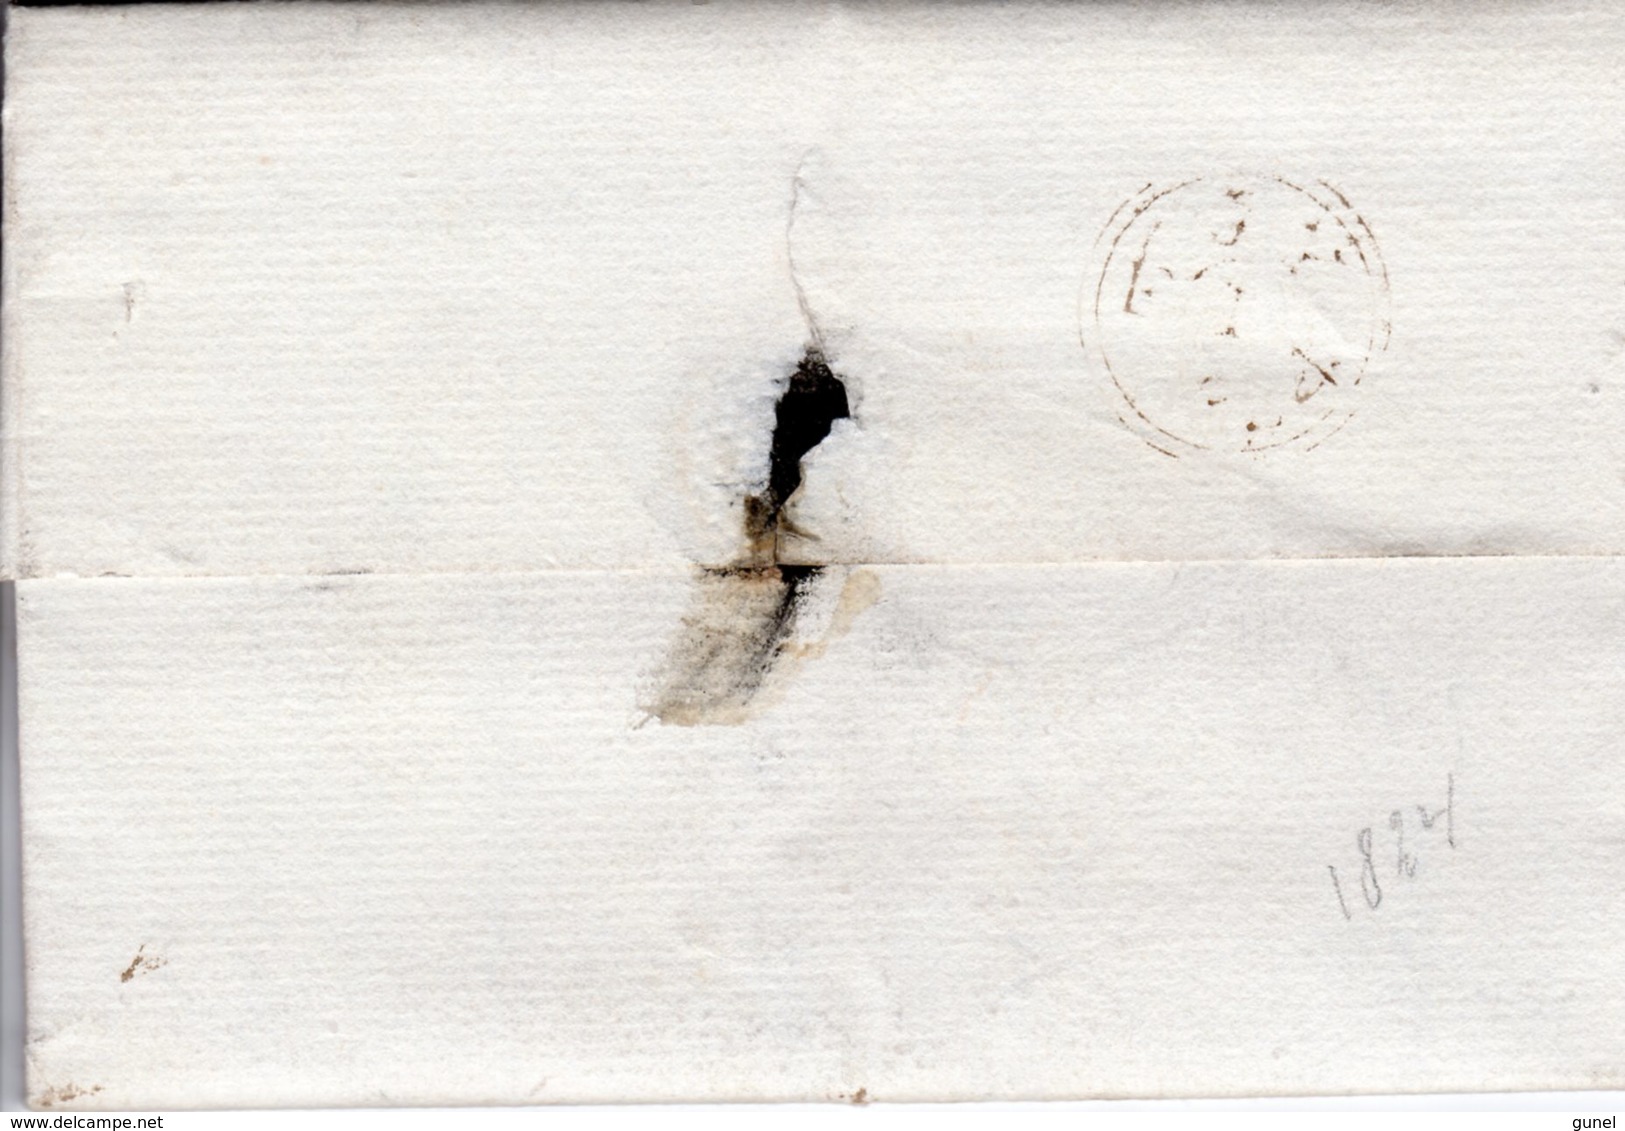 1 July 1824 Complete Letter  From Launceston - ...-1840 Precursores